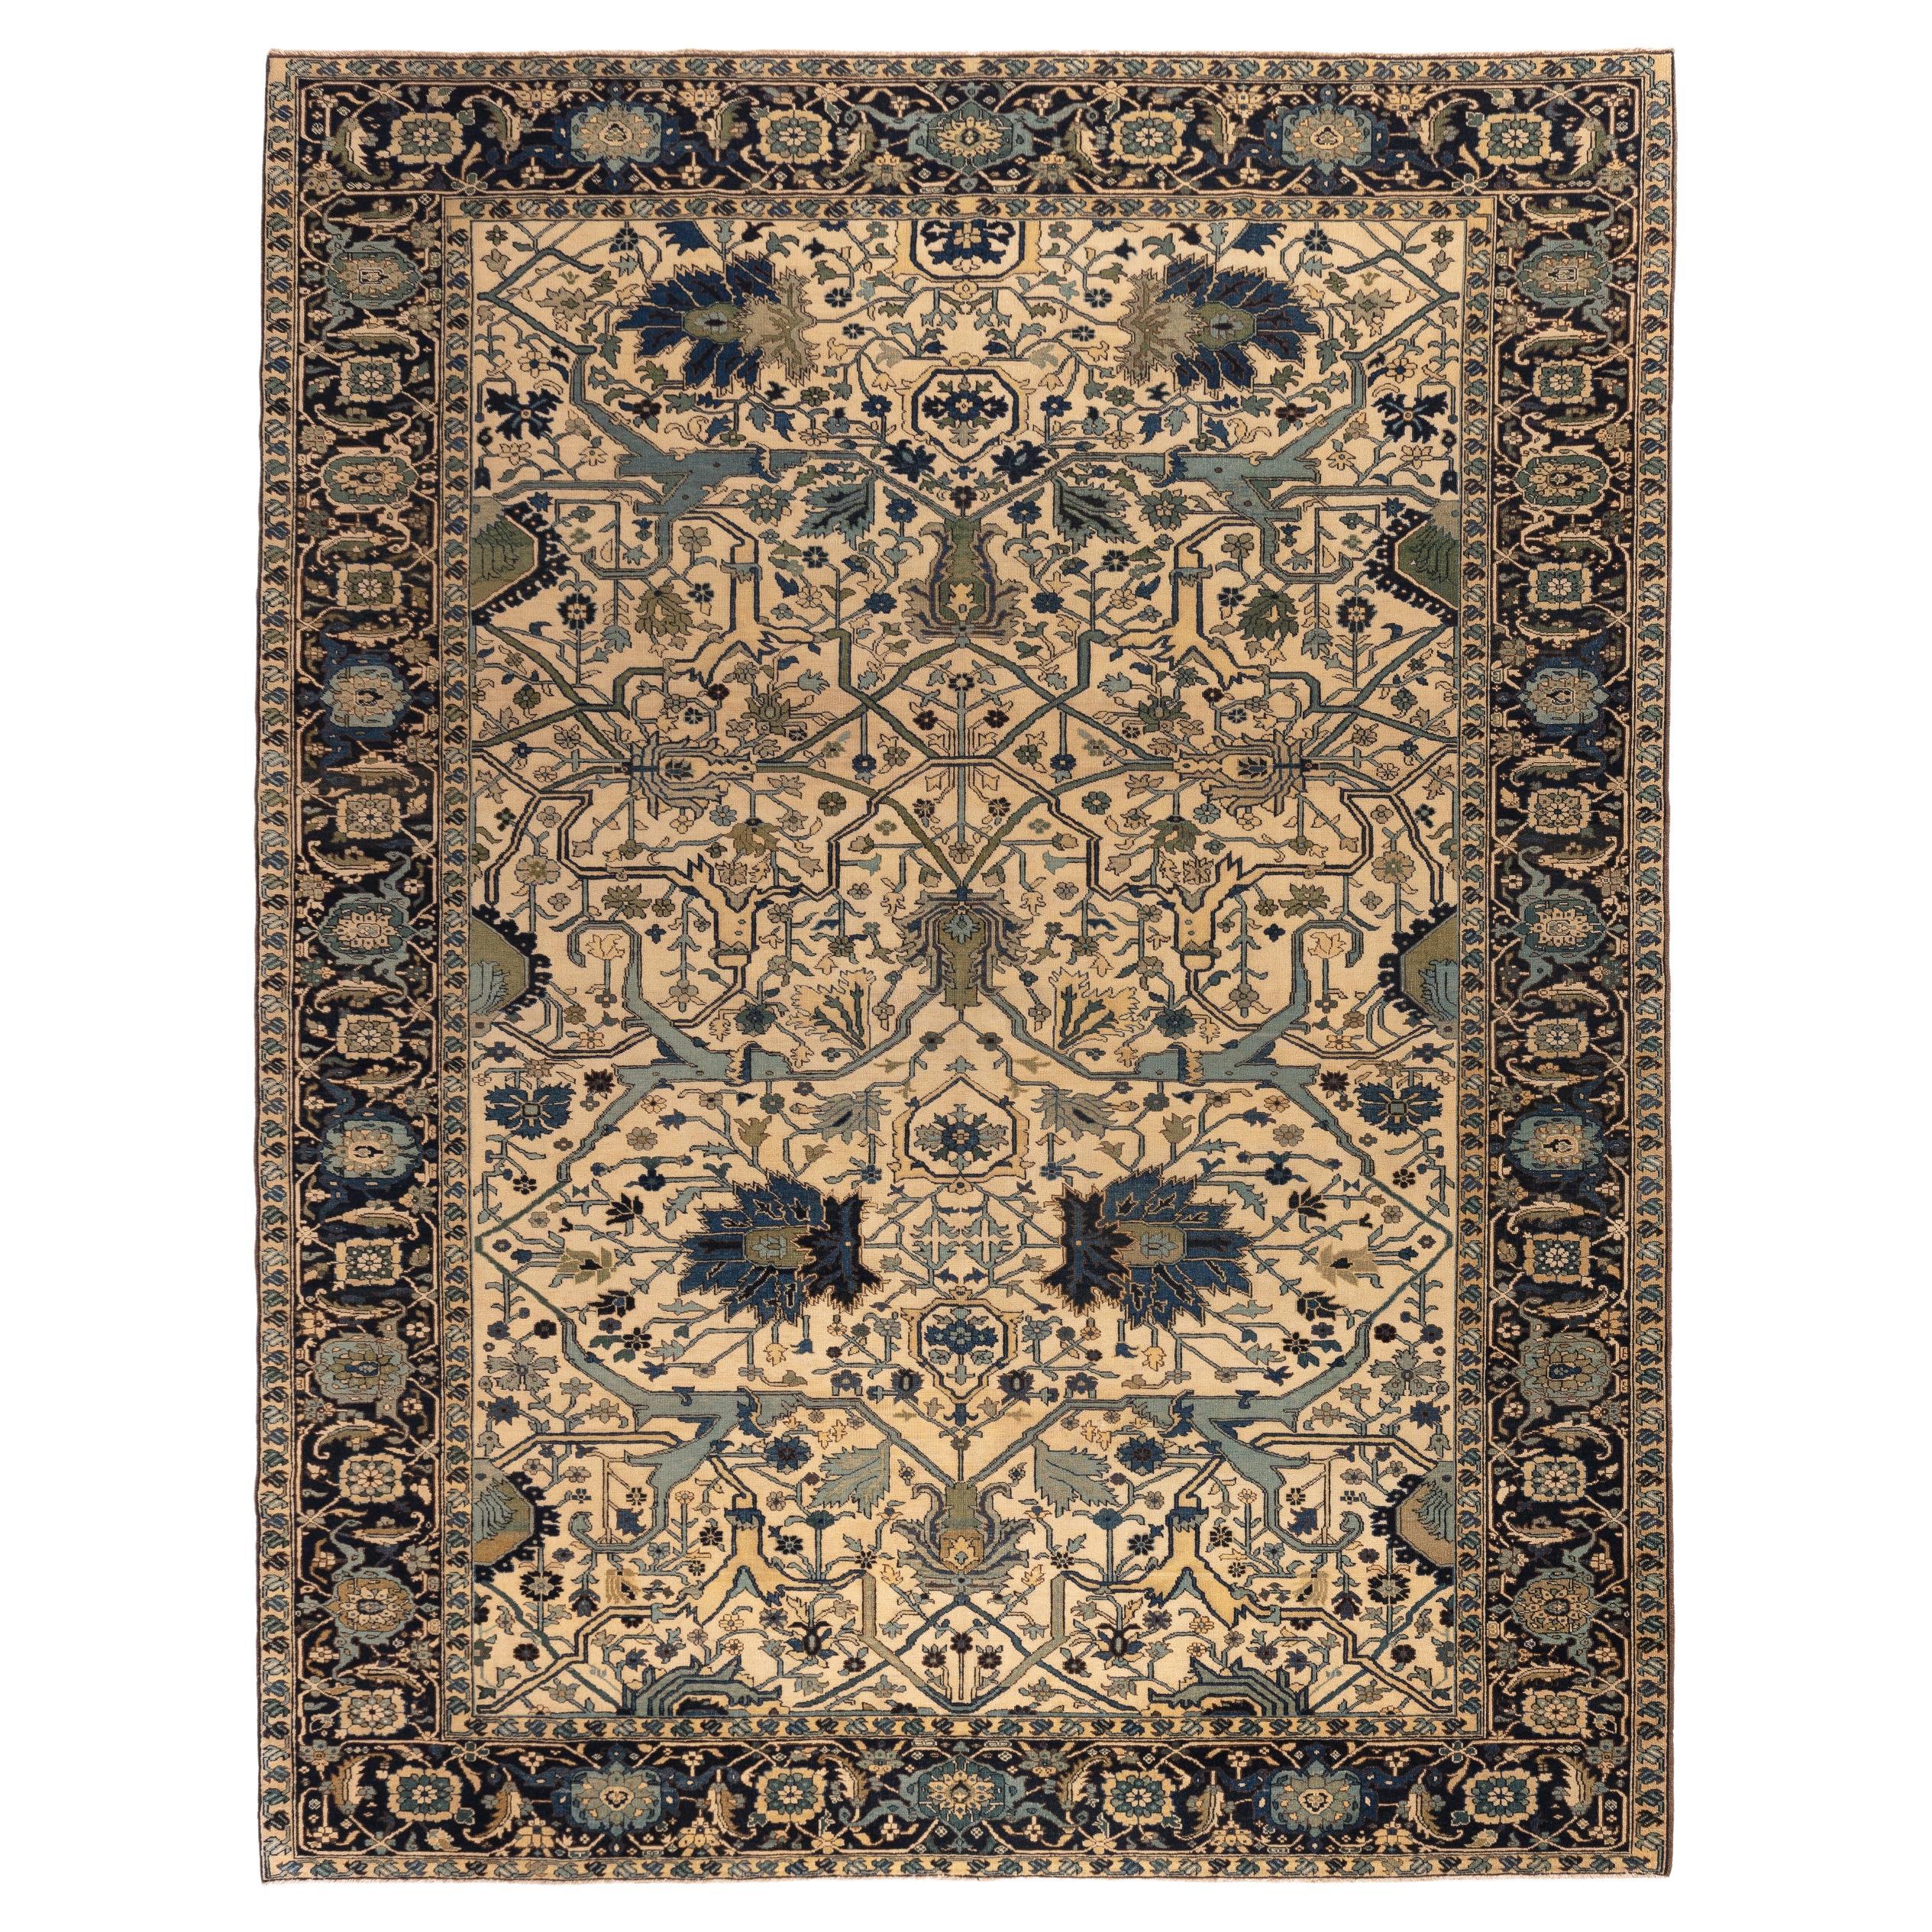 Ararat Rugs Gerous Arabesque Rug, 19th Century Revival Carpet, Natural Dyed